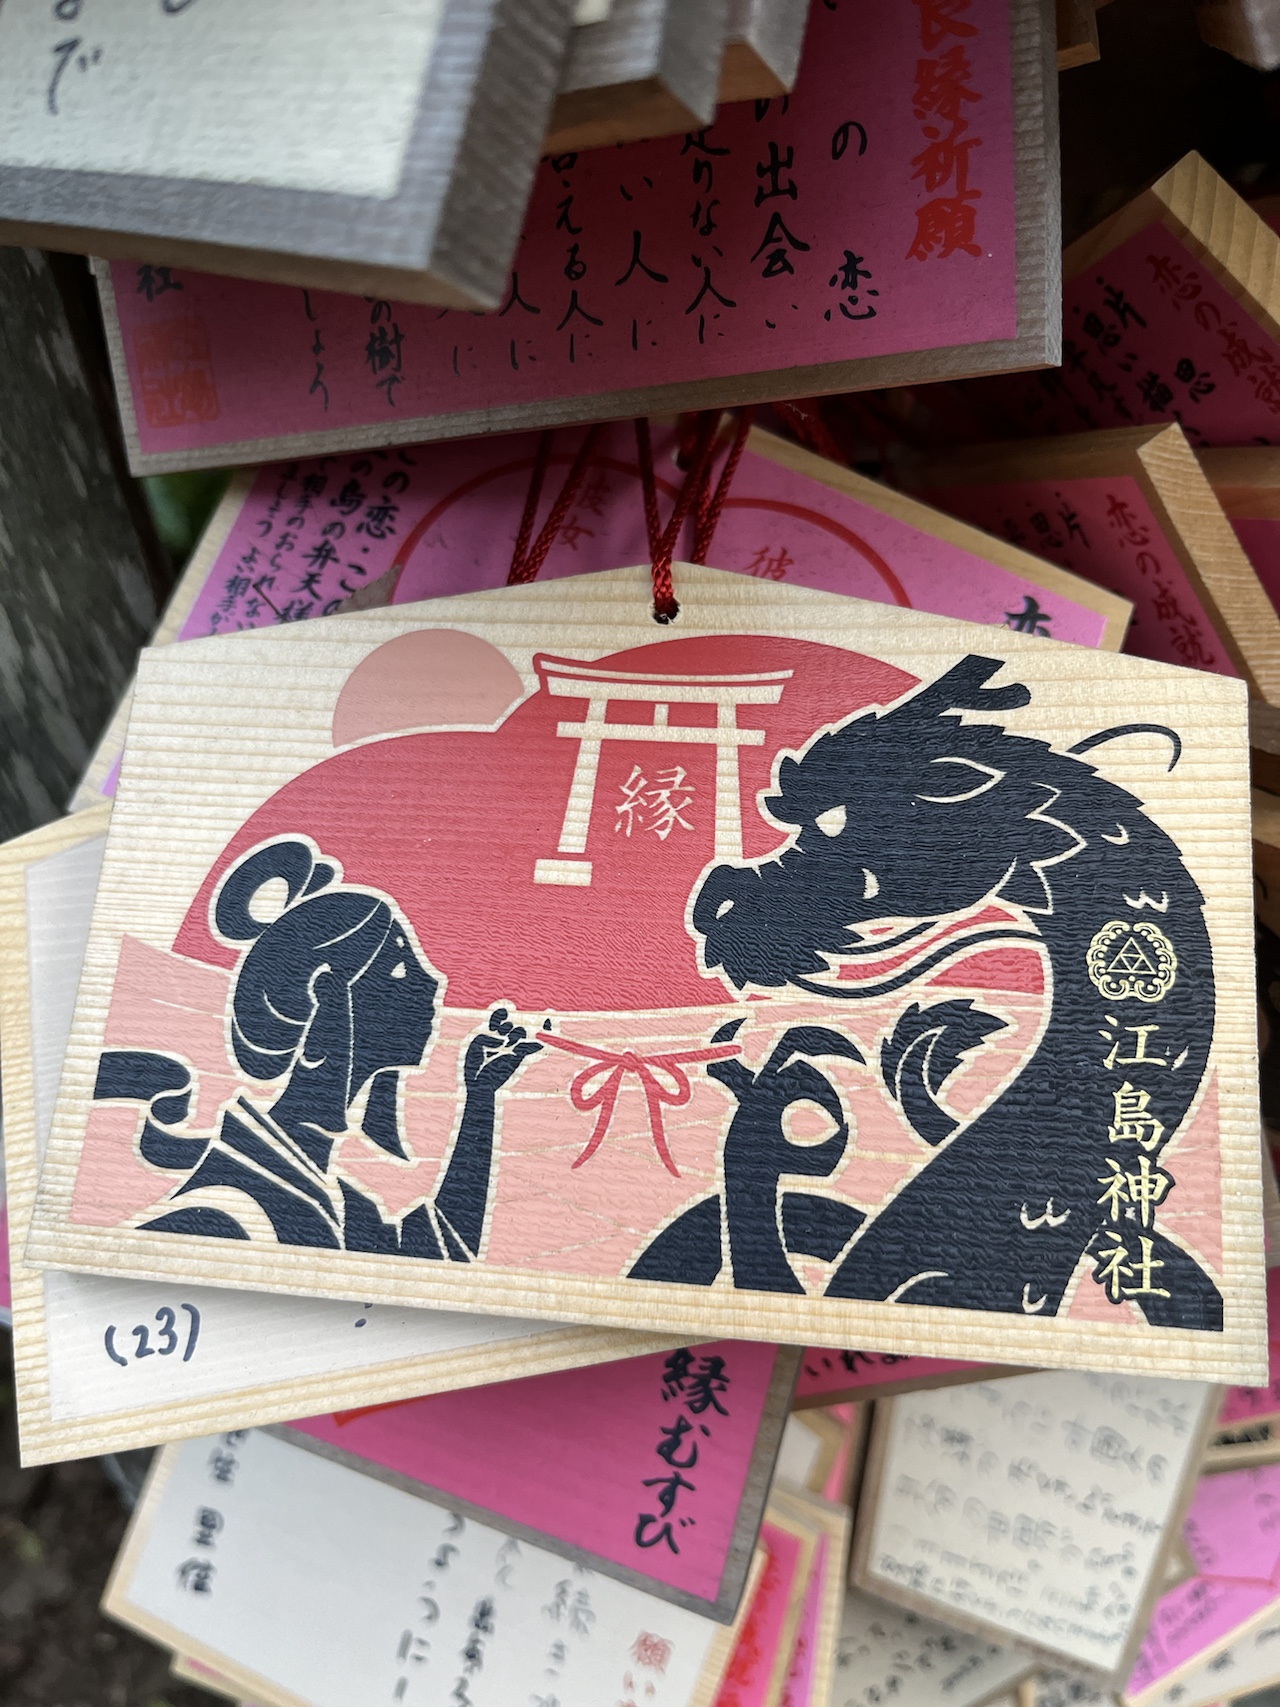 Enoshima shrine ema plaque - the story of 5 headed dragon and Benzaiten